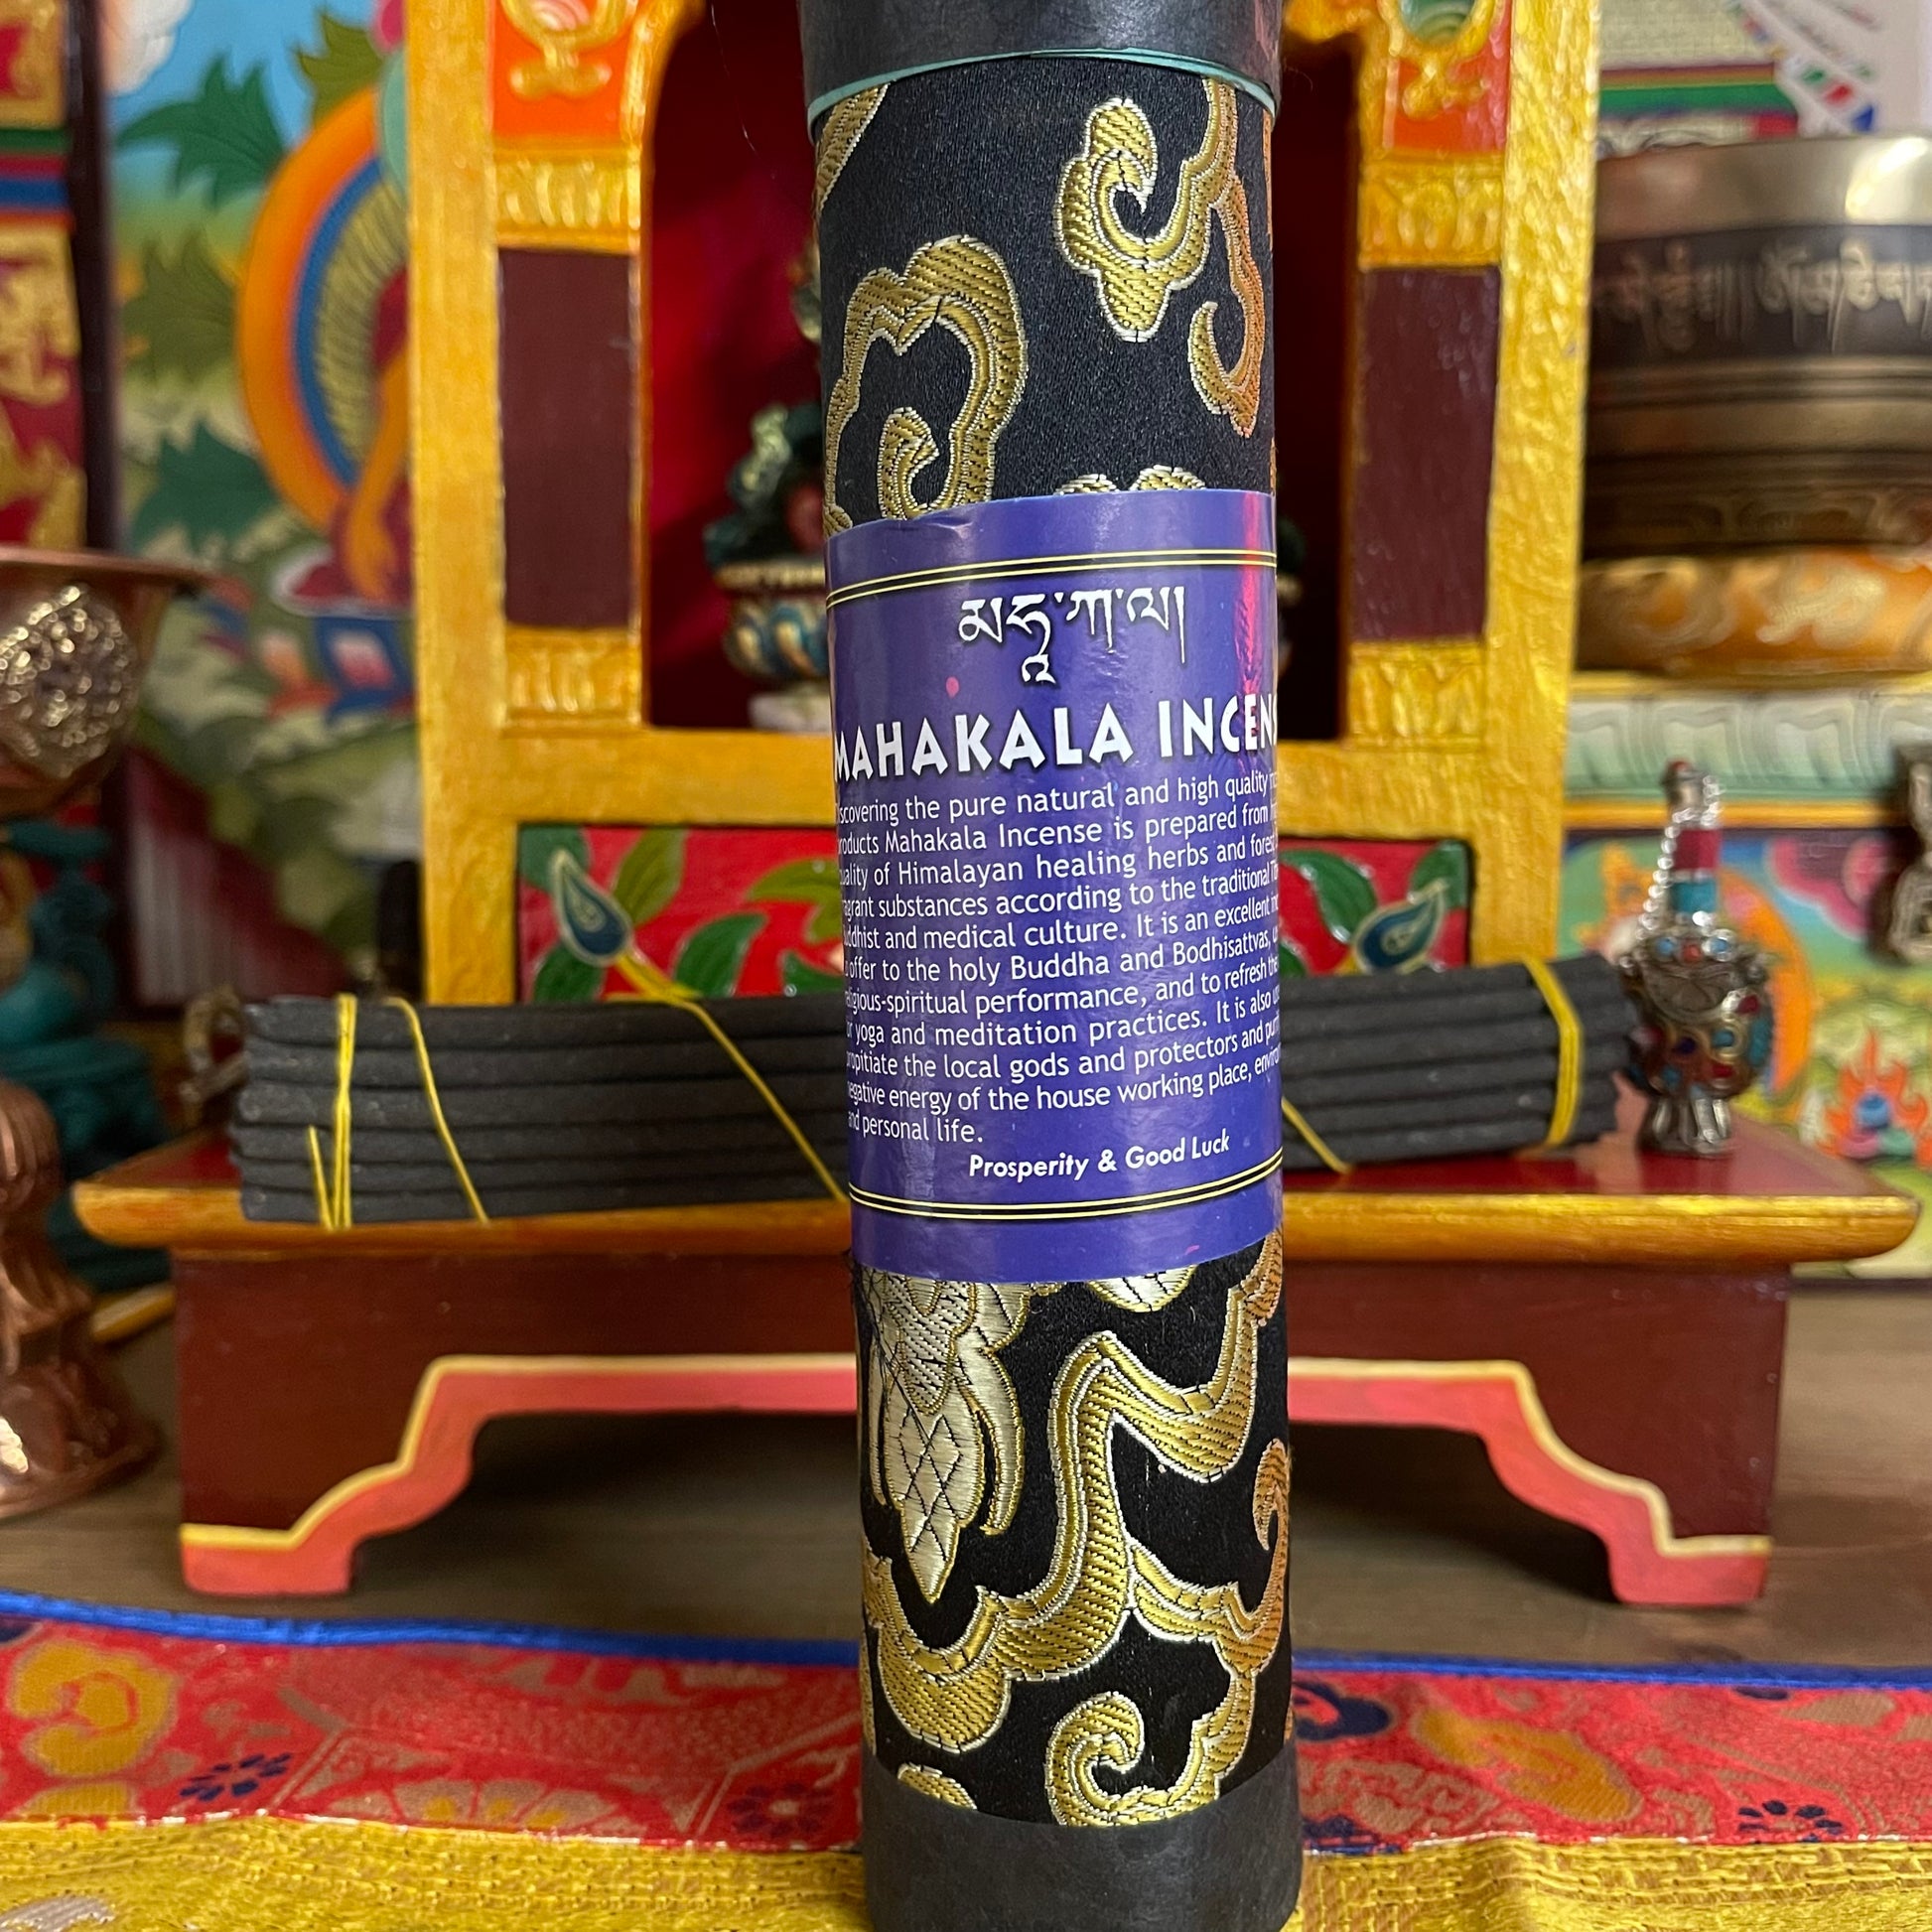 Mahakala Incense Tibetan Buddhist incense